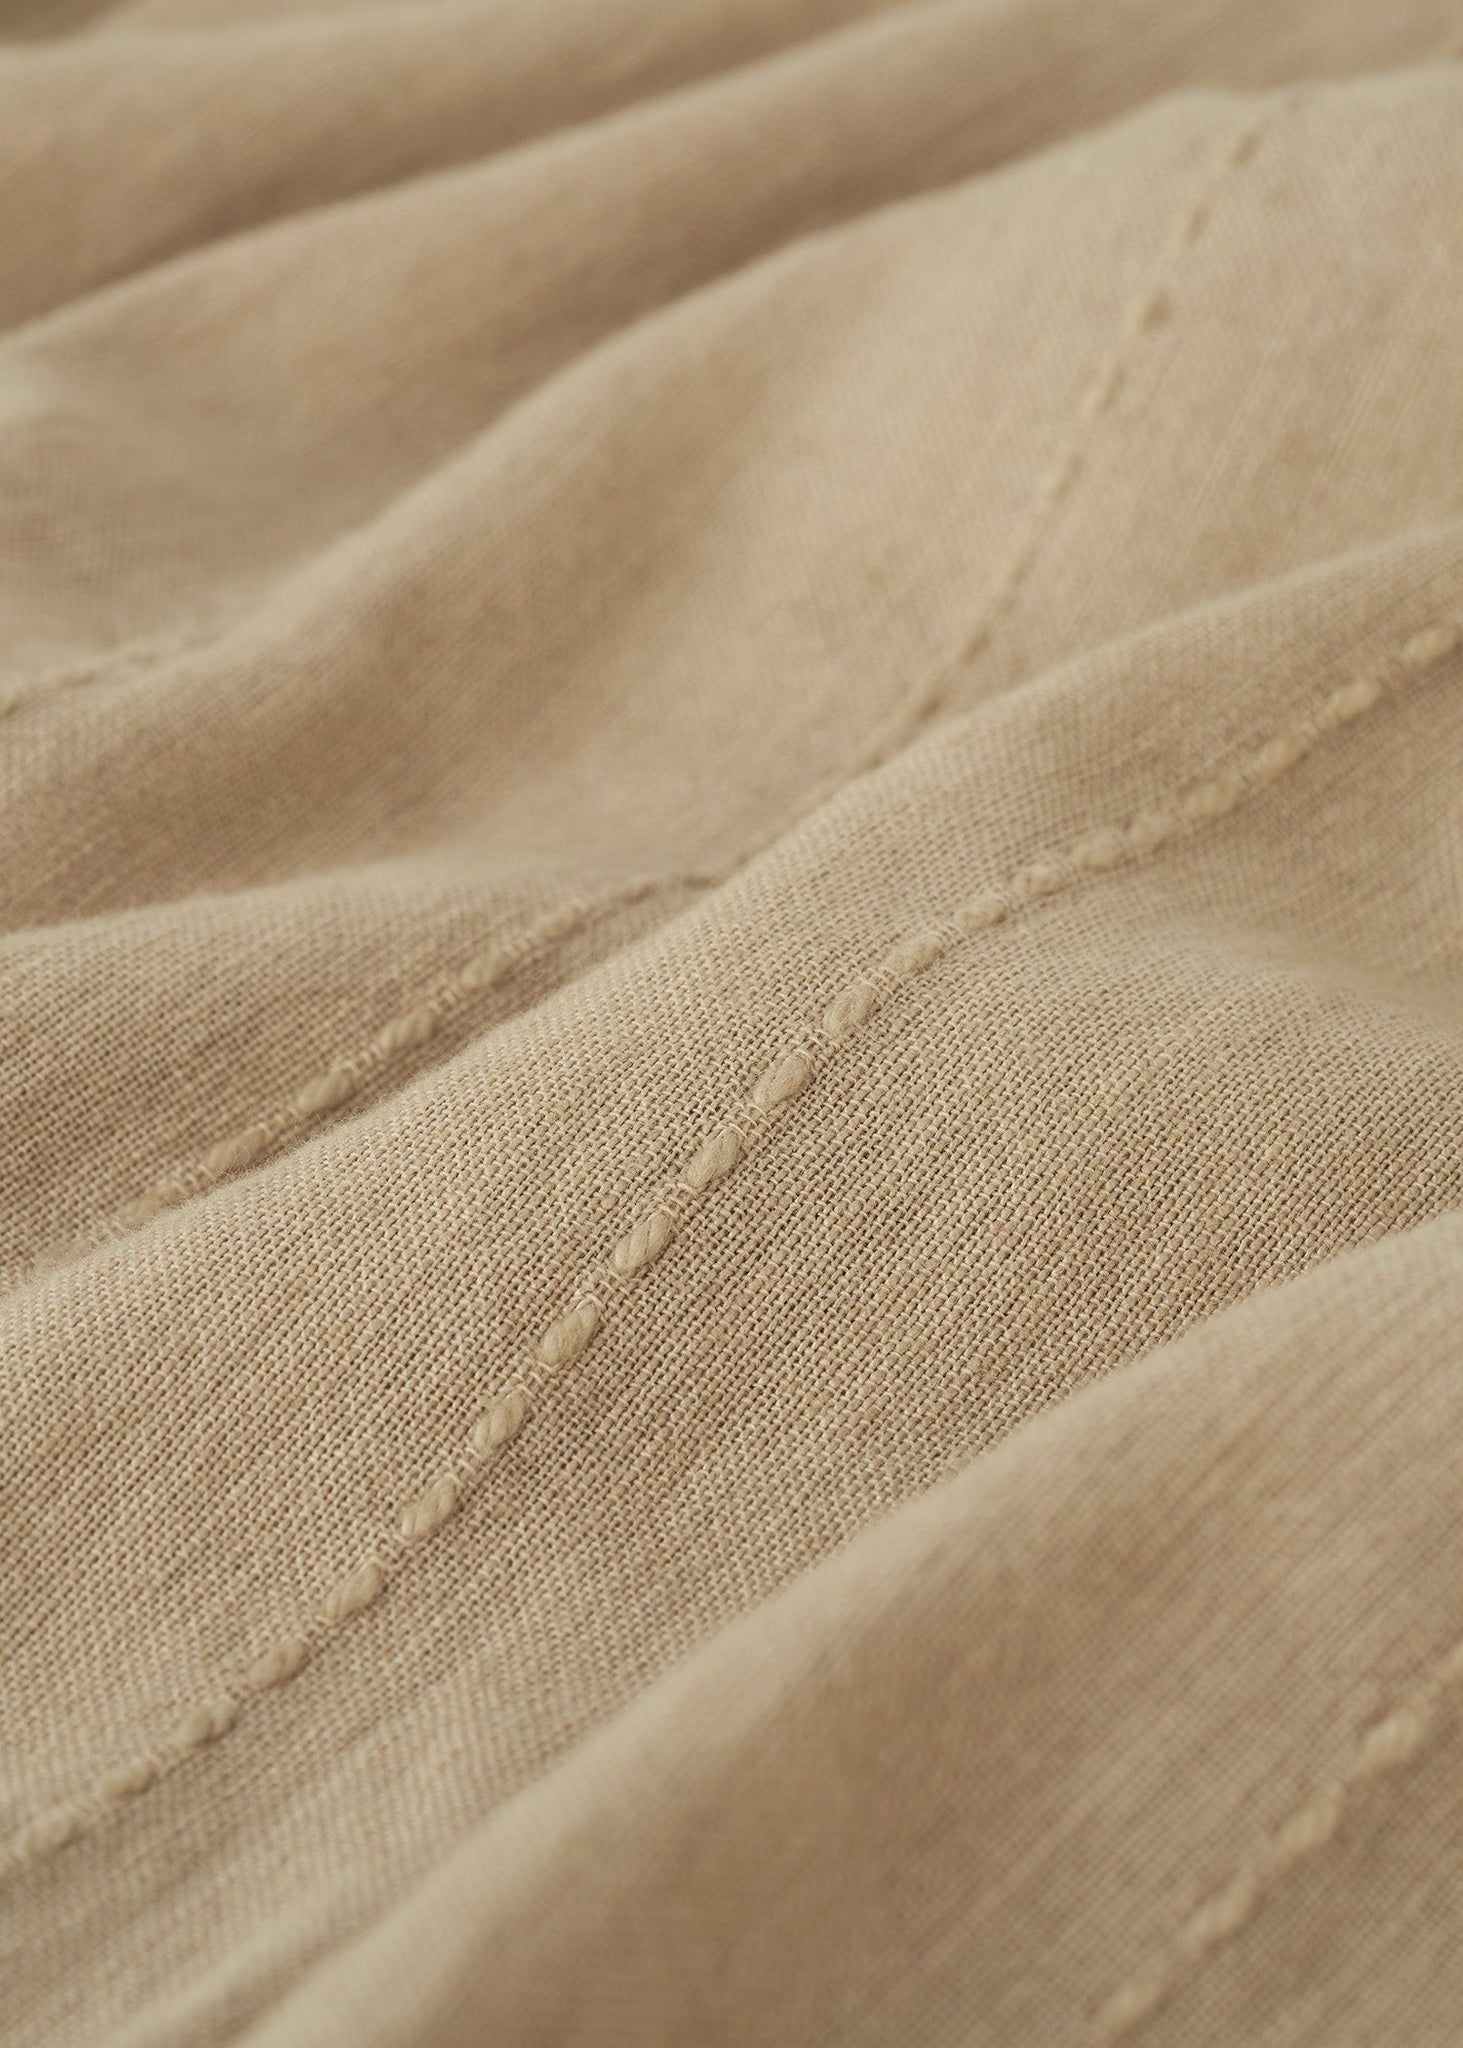 Striped linen cotton sarong overcast beige